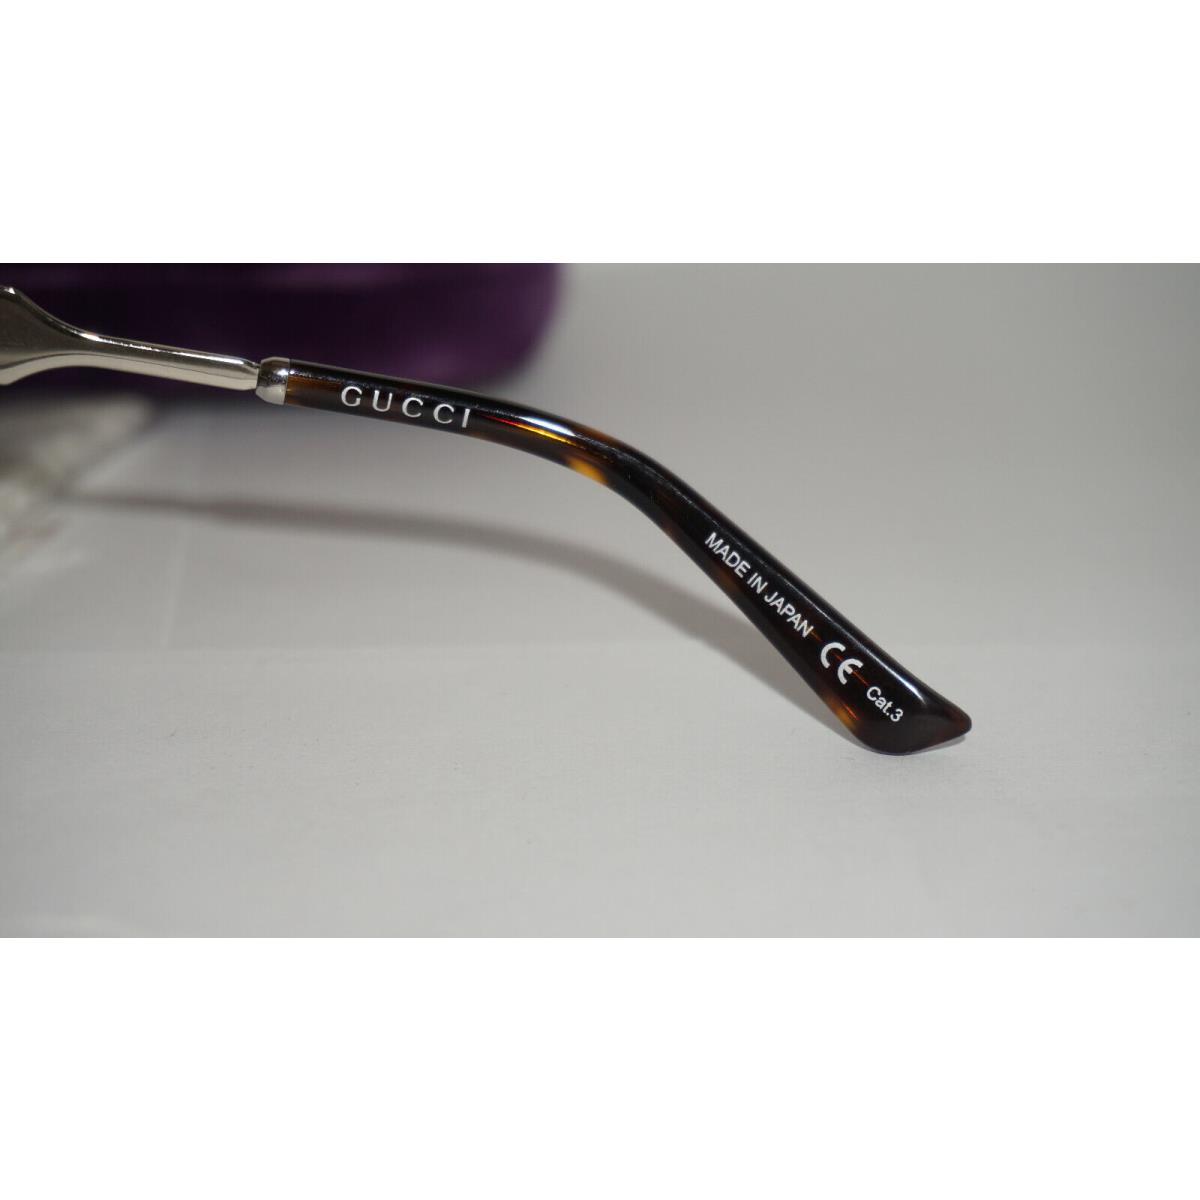 Gucci sunglasses  - Burgundy Palladium , Burgundy Palladium Frame, Grey Gradient Lens 5